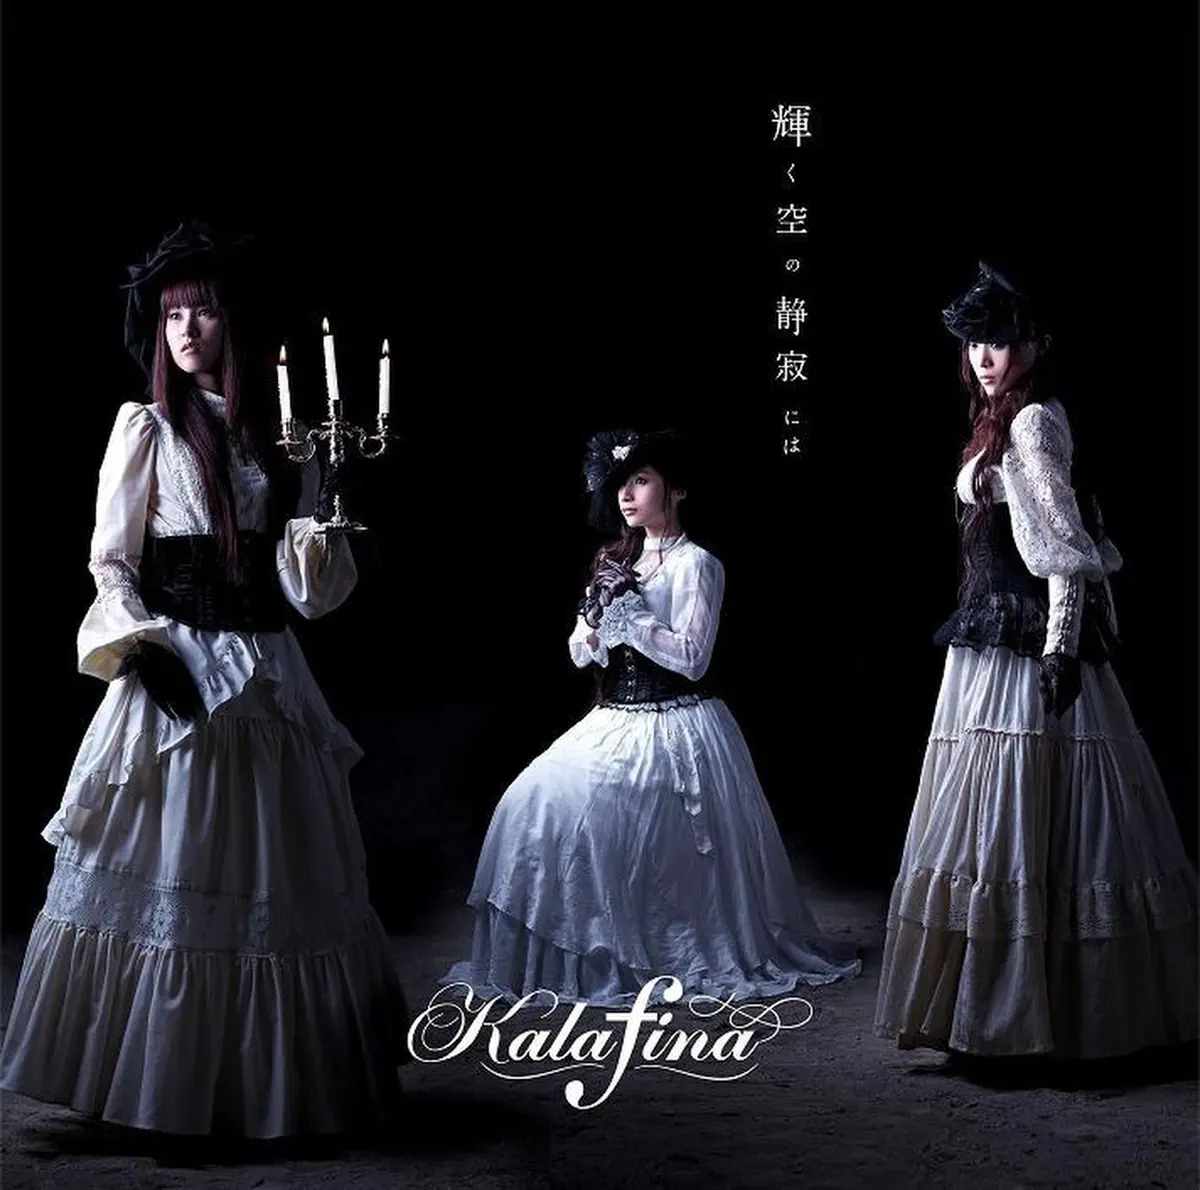 Kalafina - 輝く空の靜寂には - Single (2010) [iTunes Plus AAC M4A]-新房子